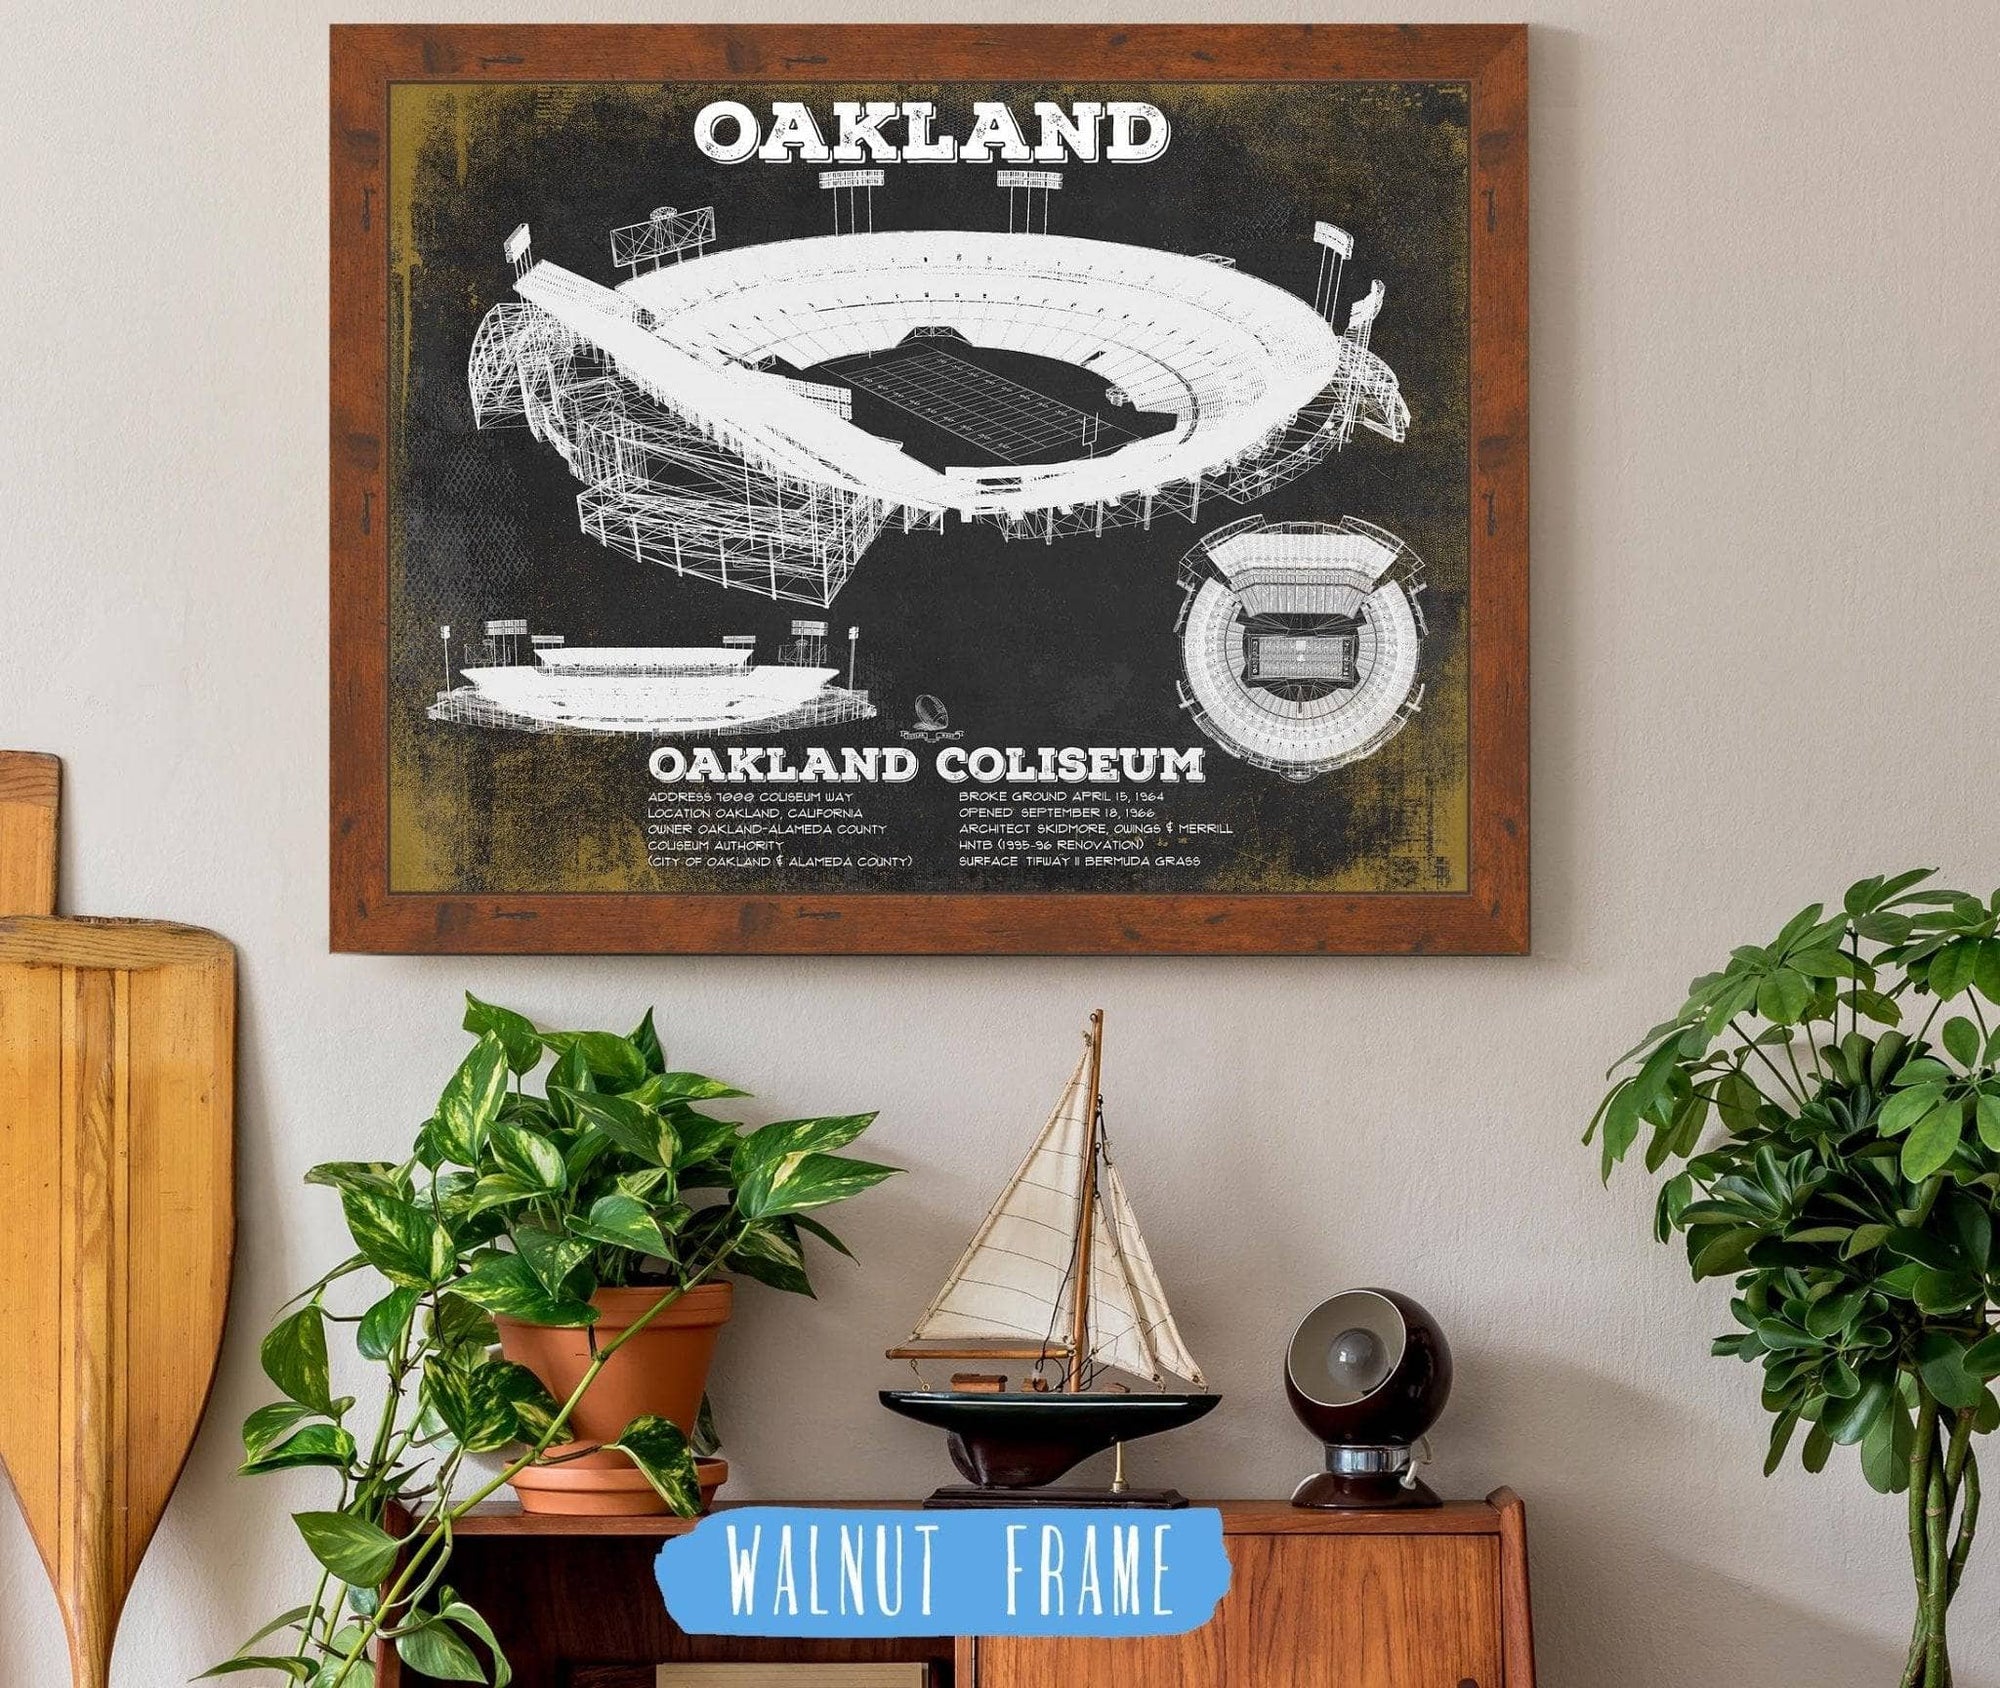 Cutler West Pro Football Collection 14" x 11" / Walnut Frame Oakland Raiders Team Colors Oakland Coliseum NFL Vintage Football Print 933350154_70430